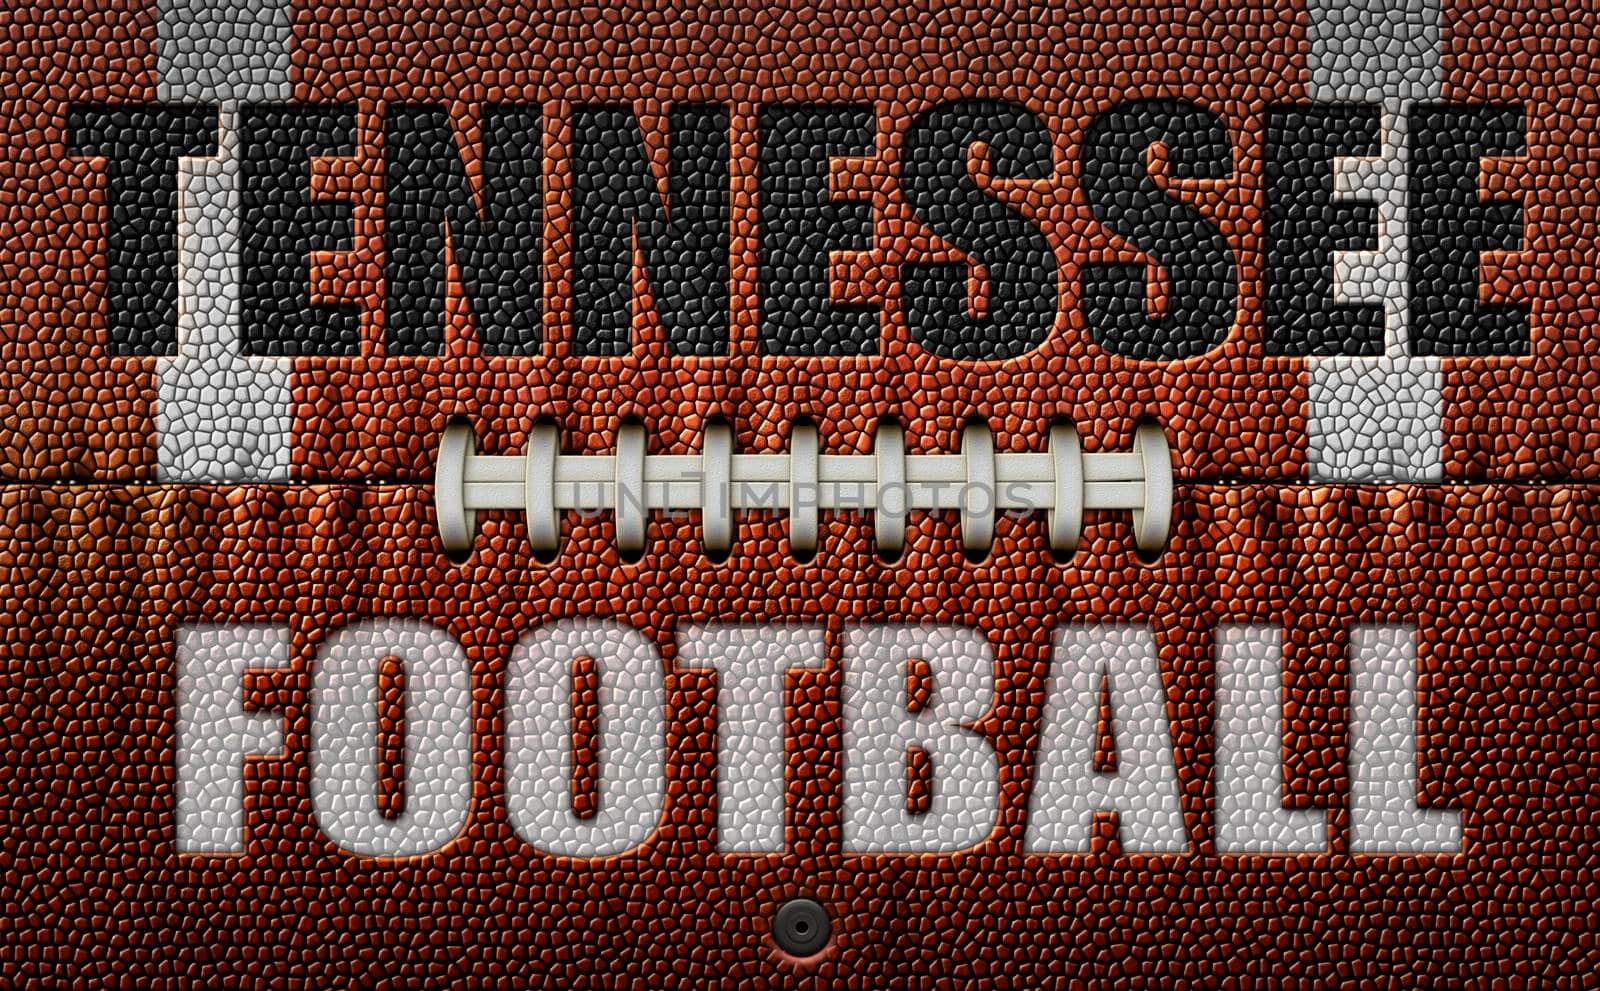 Tennessee Football Text on a Flattened Football by jimlarkin